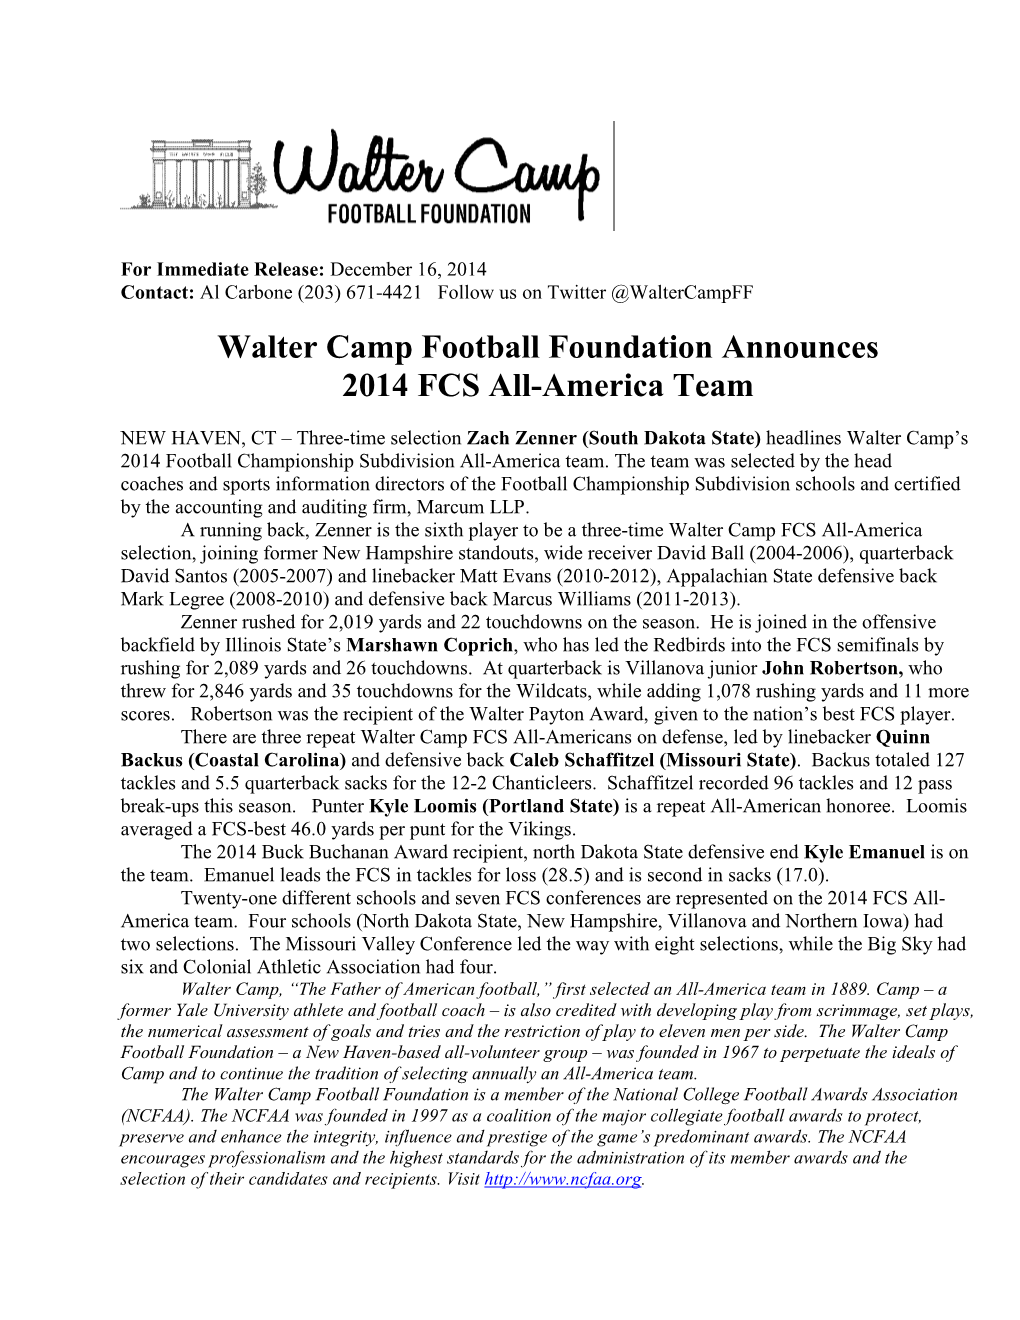 2014 Walter Camp FCS All-America Team